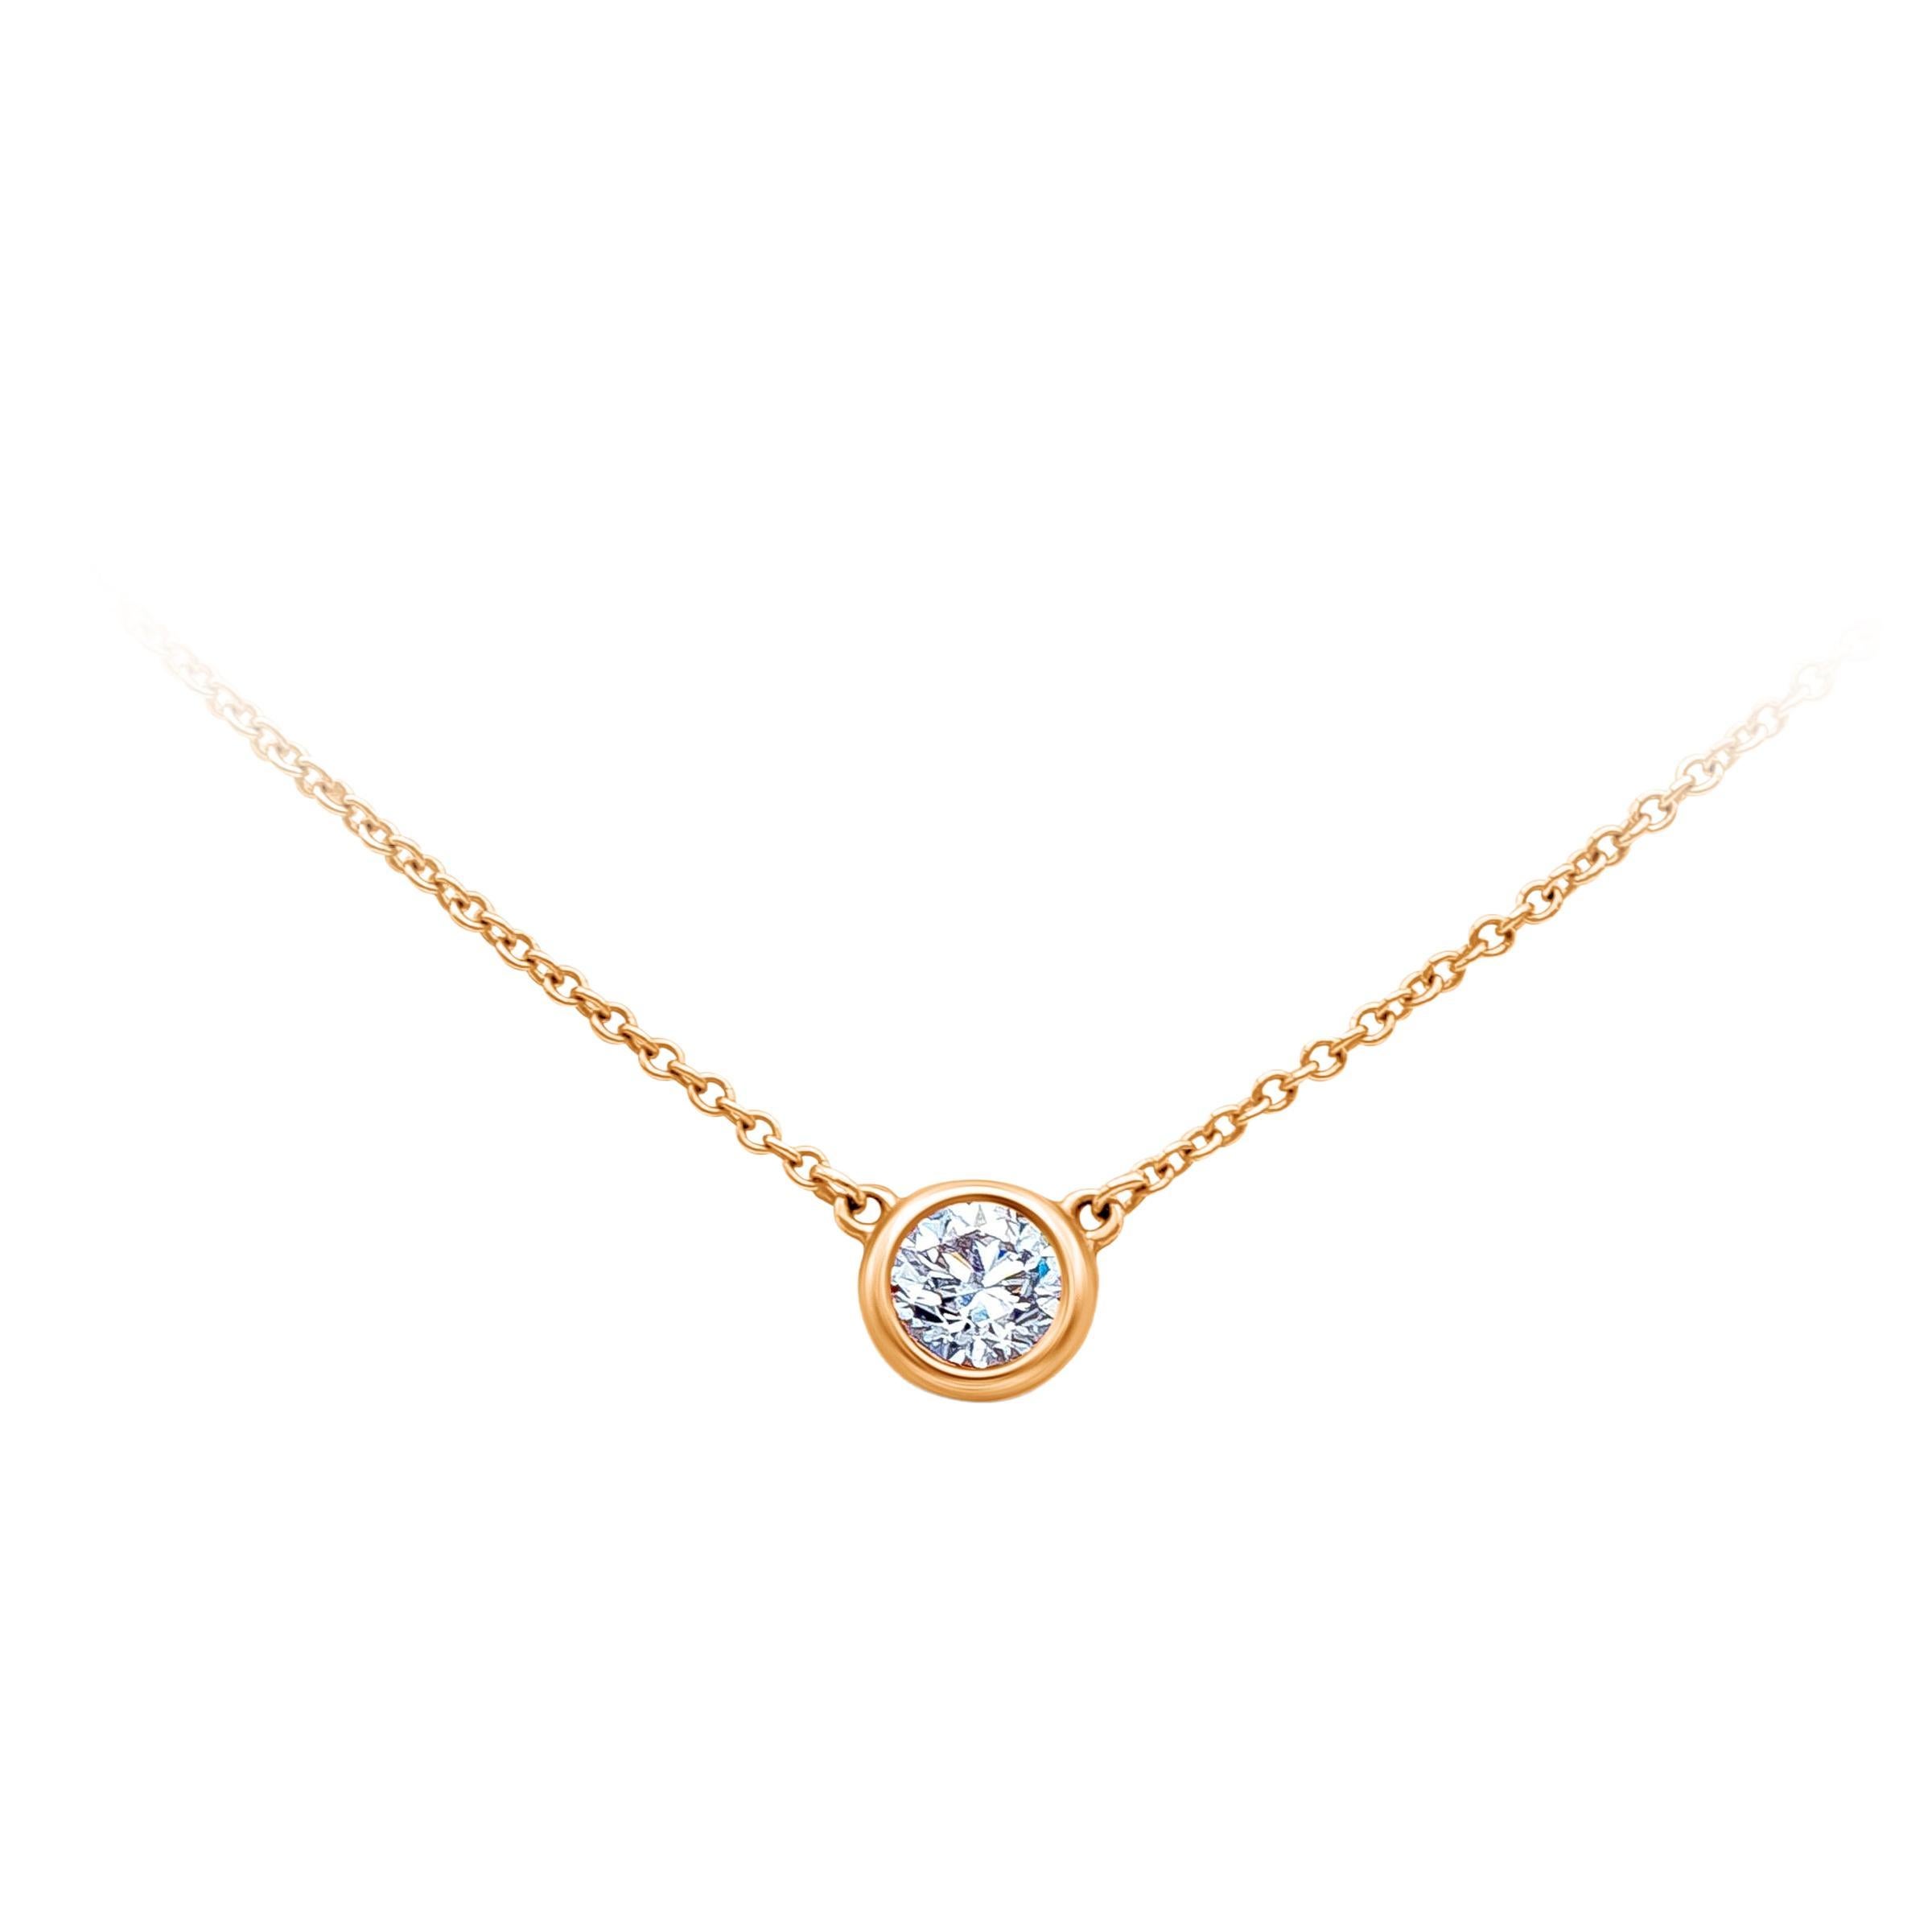 Roman Malakov, collier pendentif solitaire serti d'un diamant rond de 0,47 carat en vente